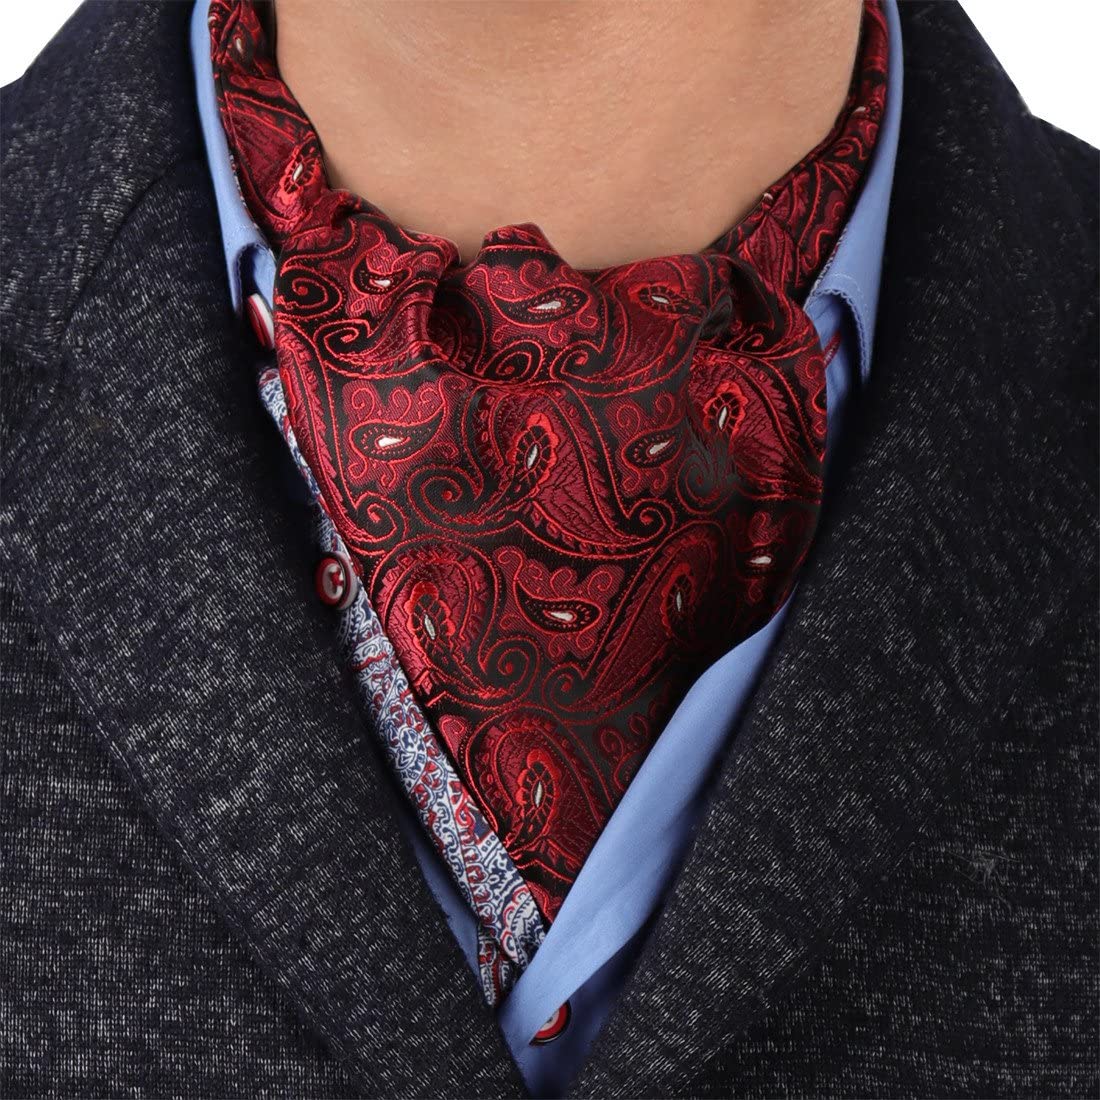 Epoint Mens Fashion Evening Paisley Cravat Microfiber Ascot Tie Pocket Square Set Gift Selection with Gift Box Set 